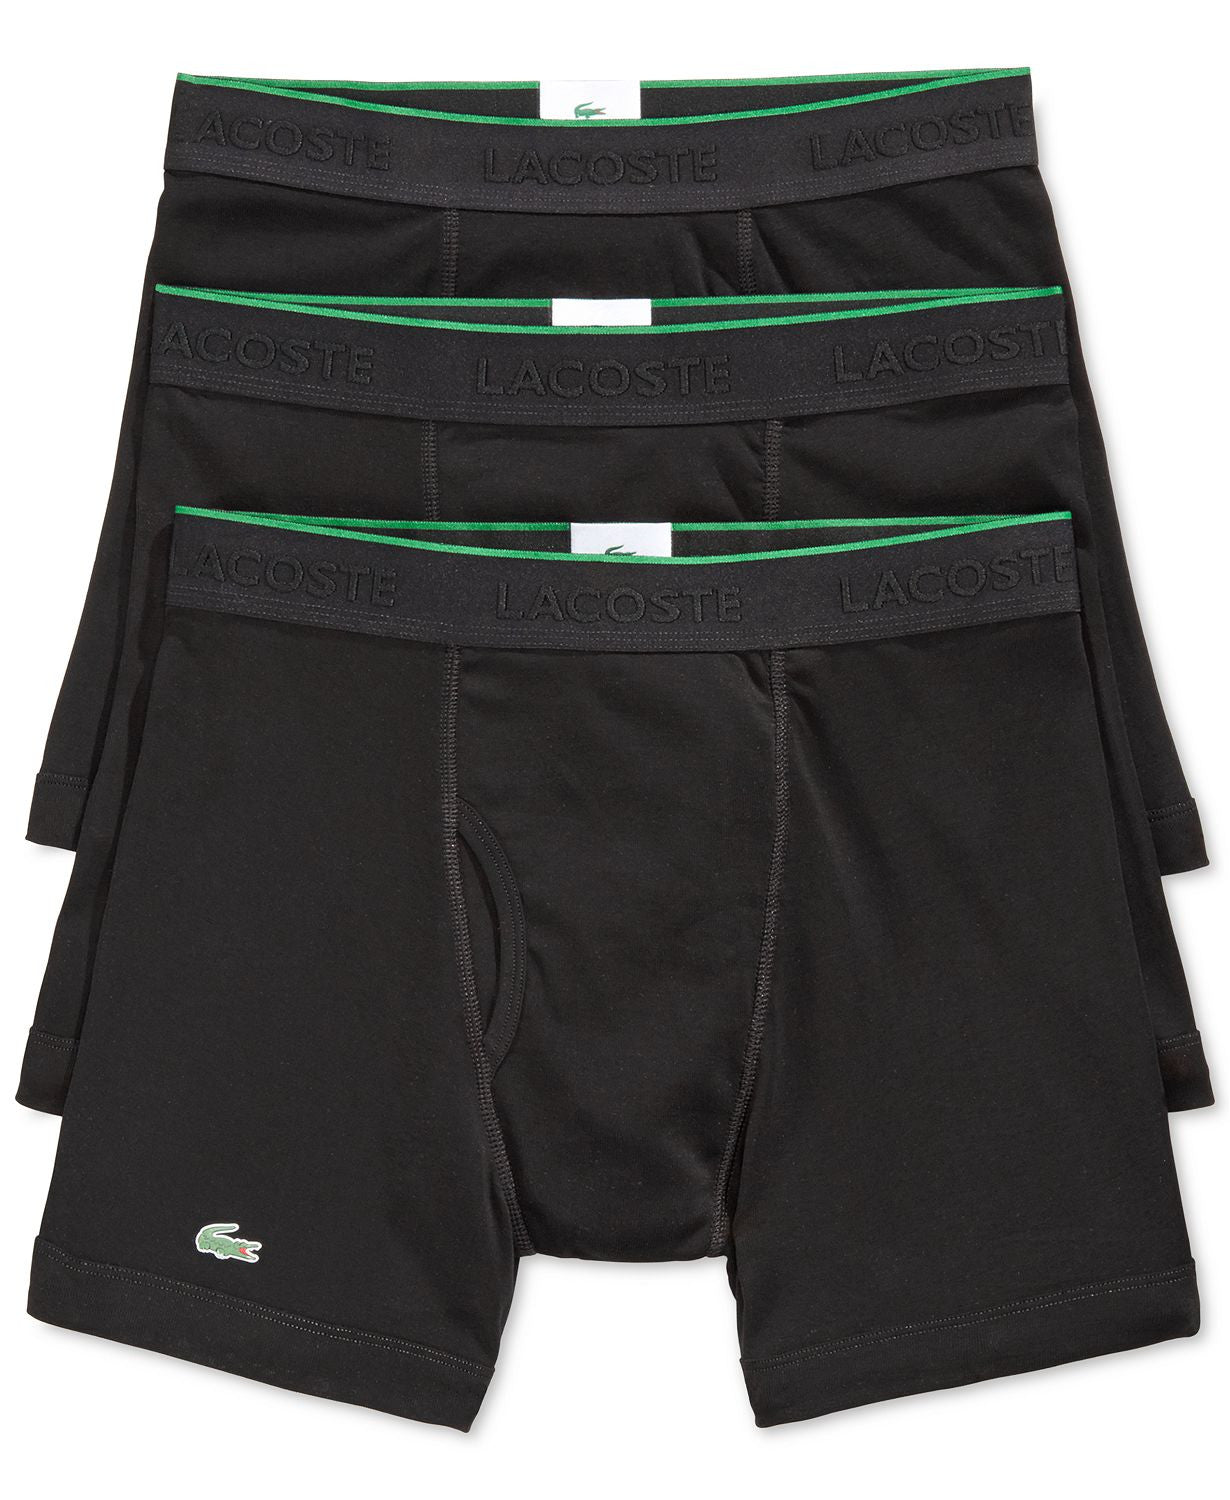 Lacoste 100% Cotton Boxer Brief Underwear Multipack Black